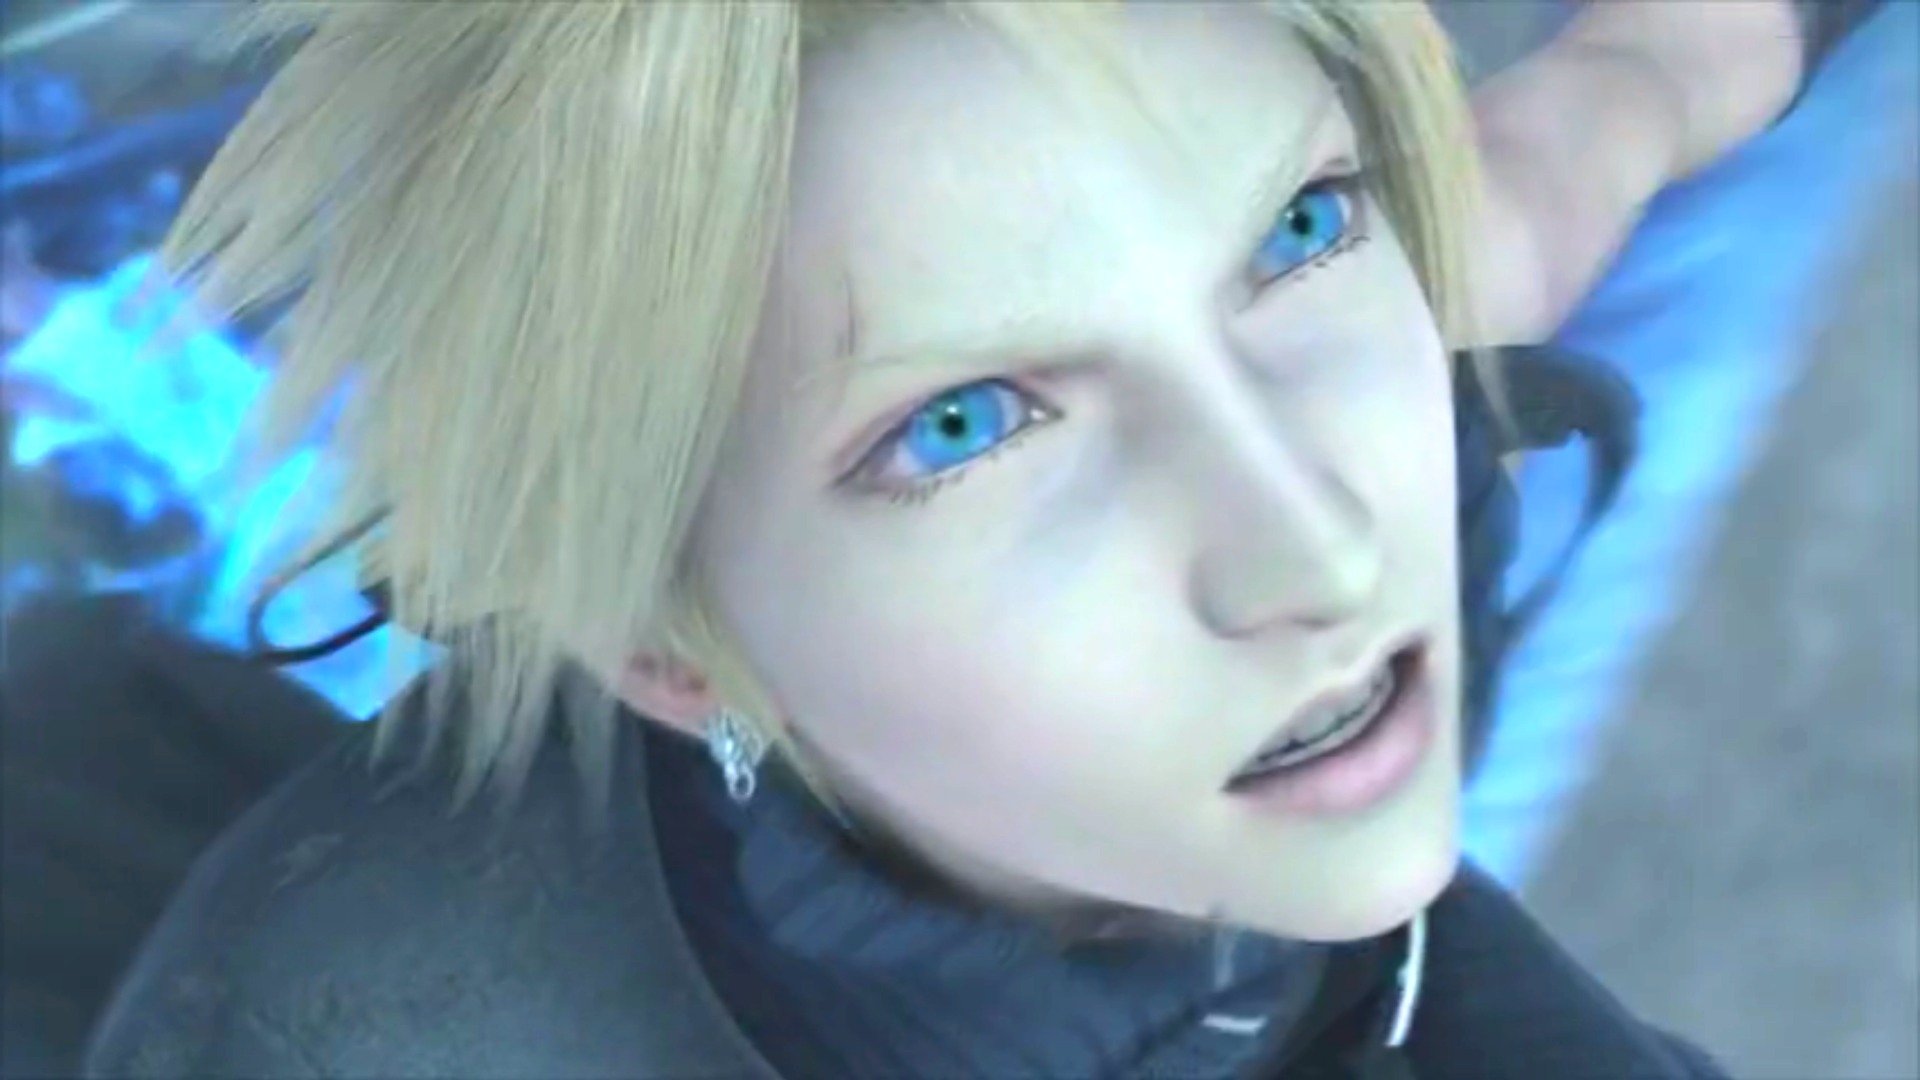 Final Fantasy VII: Advent Children - Rotten Tomatoes